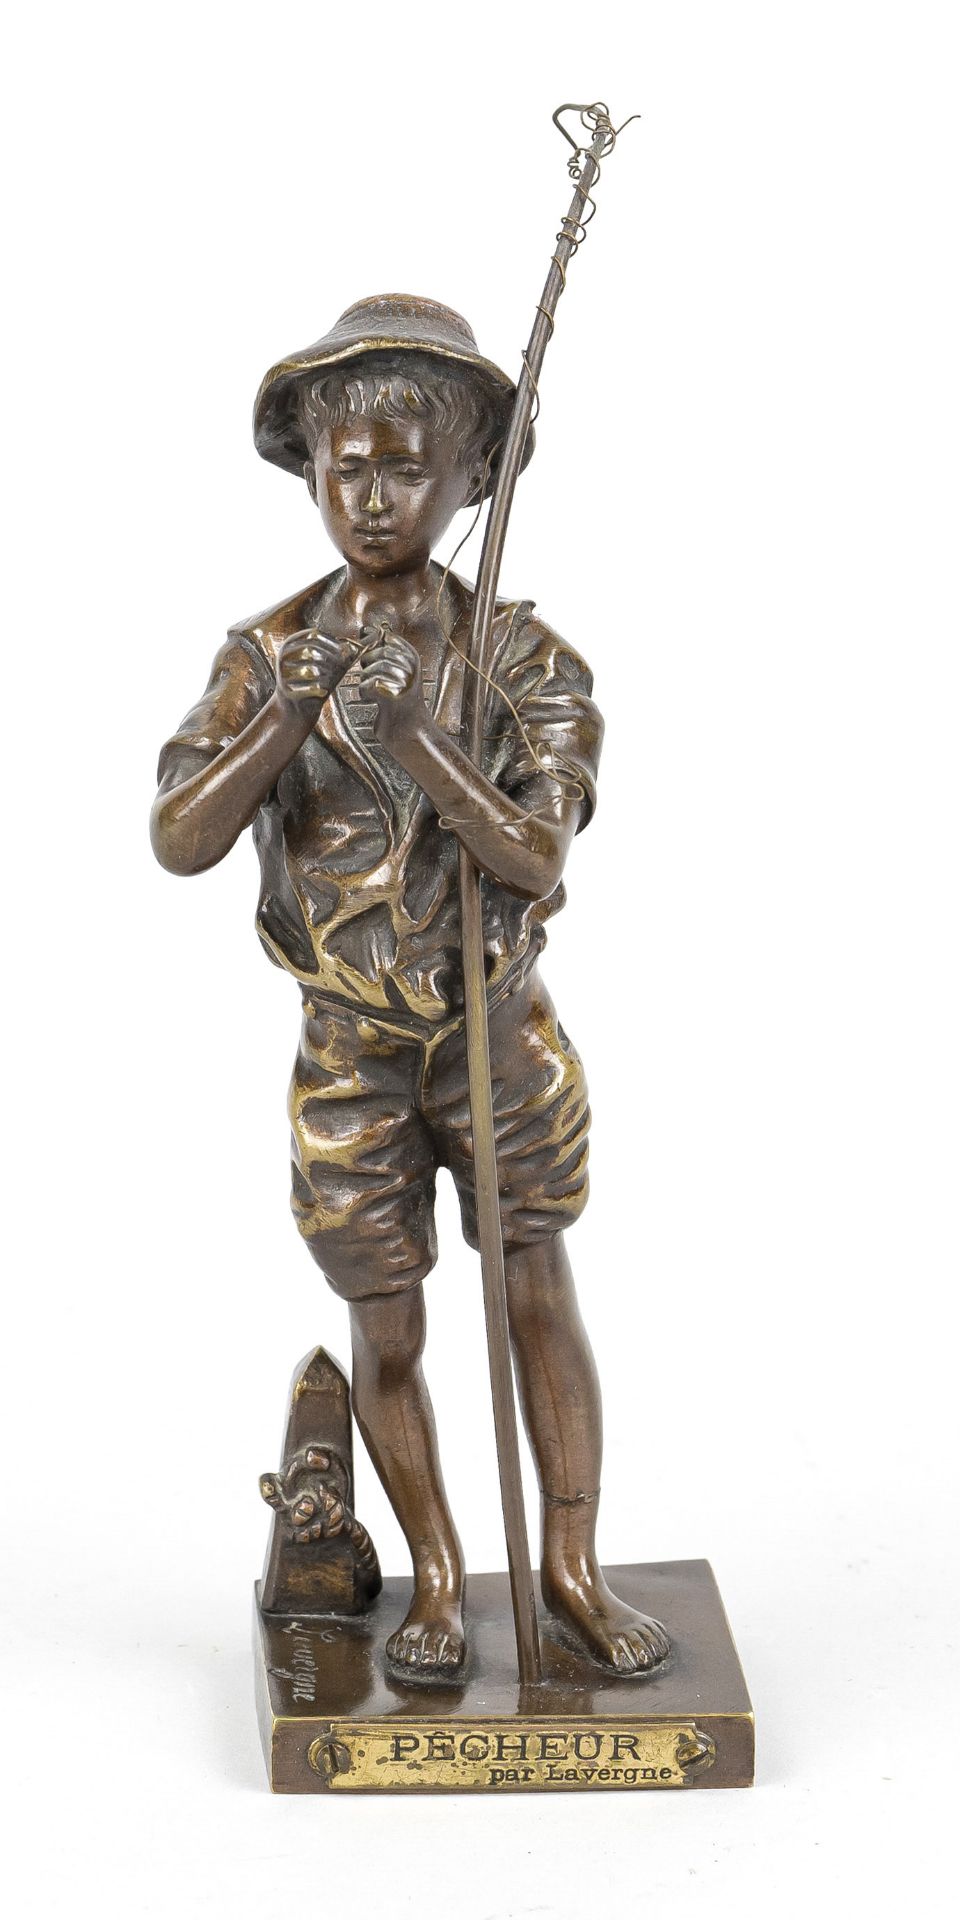 Adolphe Jean Lavergne (ca. 1863-1928), French sculptor, ''Le pecheur'', bronze sculpture of a